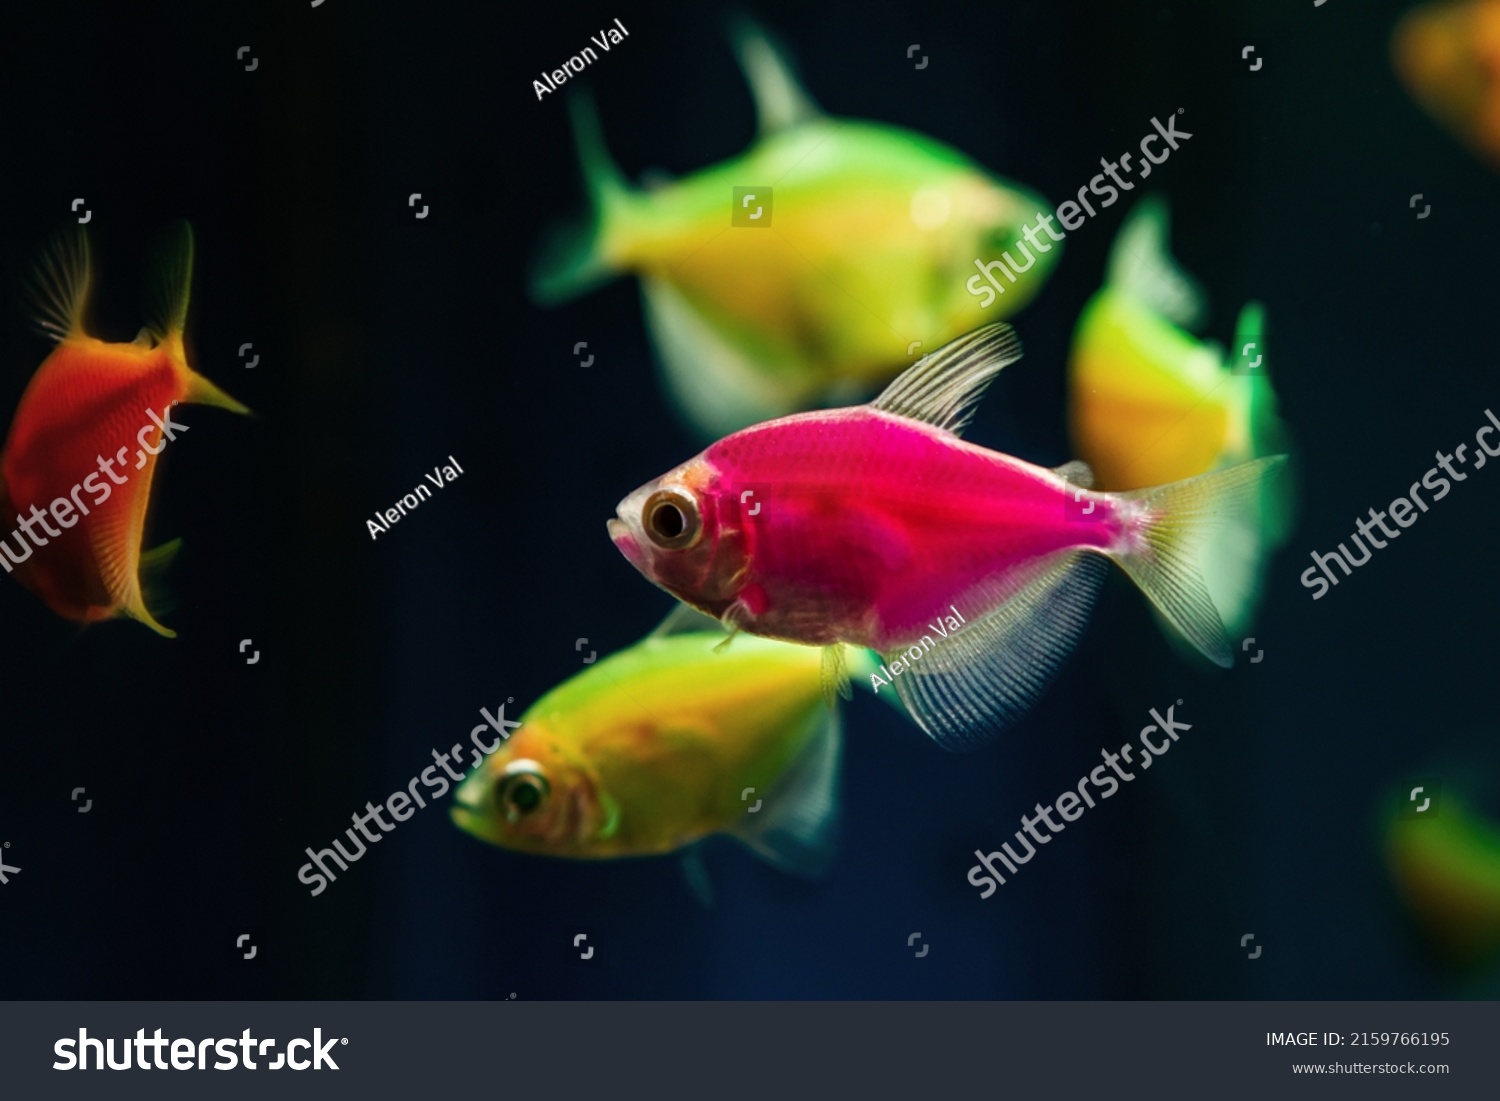 pink and lemon glowing tetra Glofish breed, colorful adults, freshwater characin fish in natural aquarium, free space dark blur background, pet shop, popular ornamental enduring species for beginners #2159766195